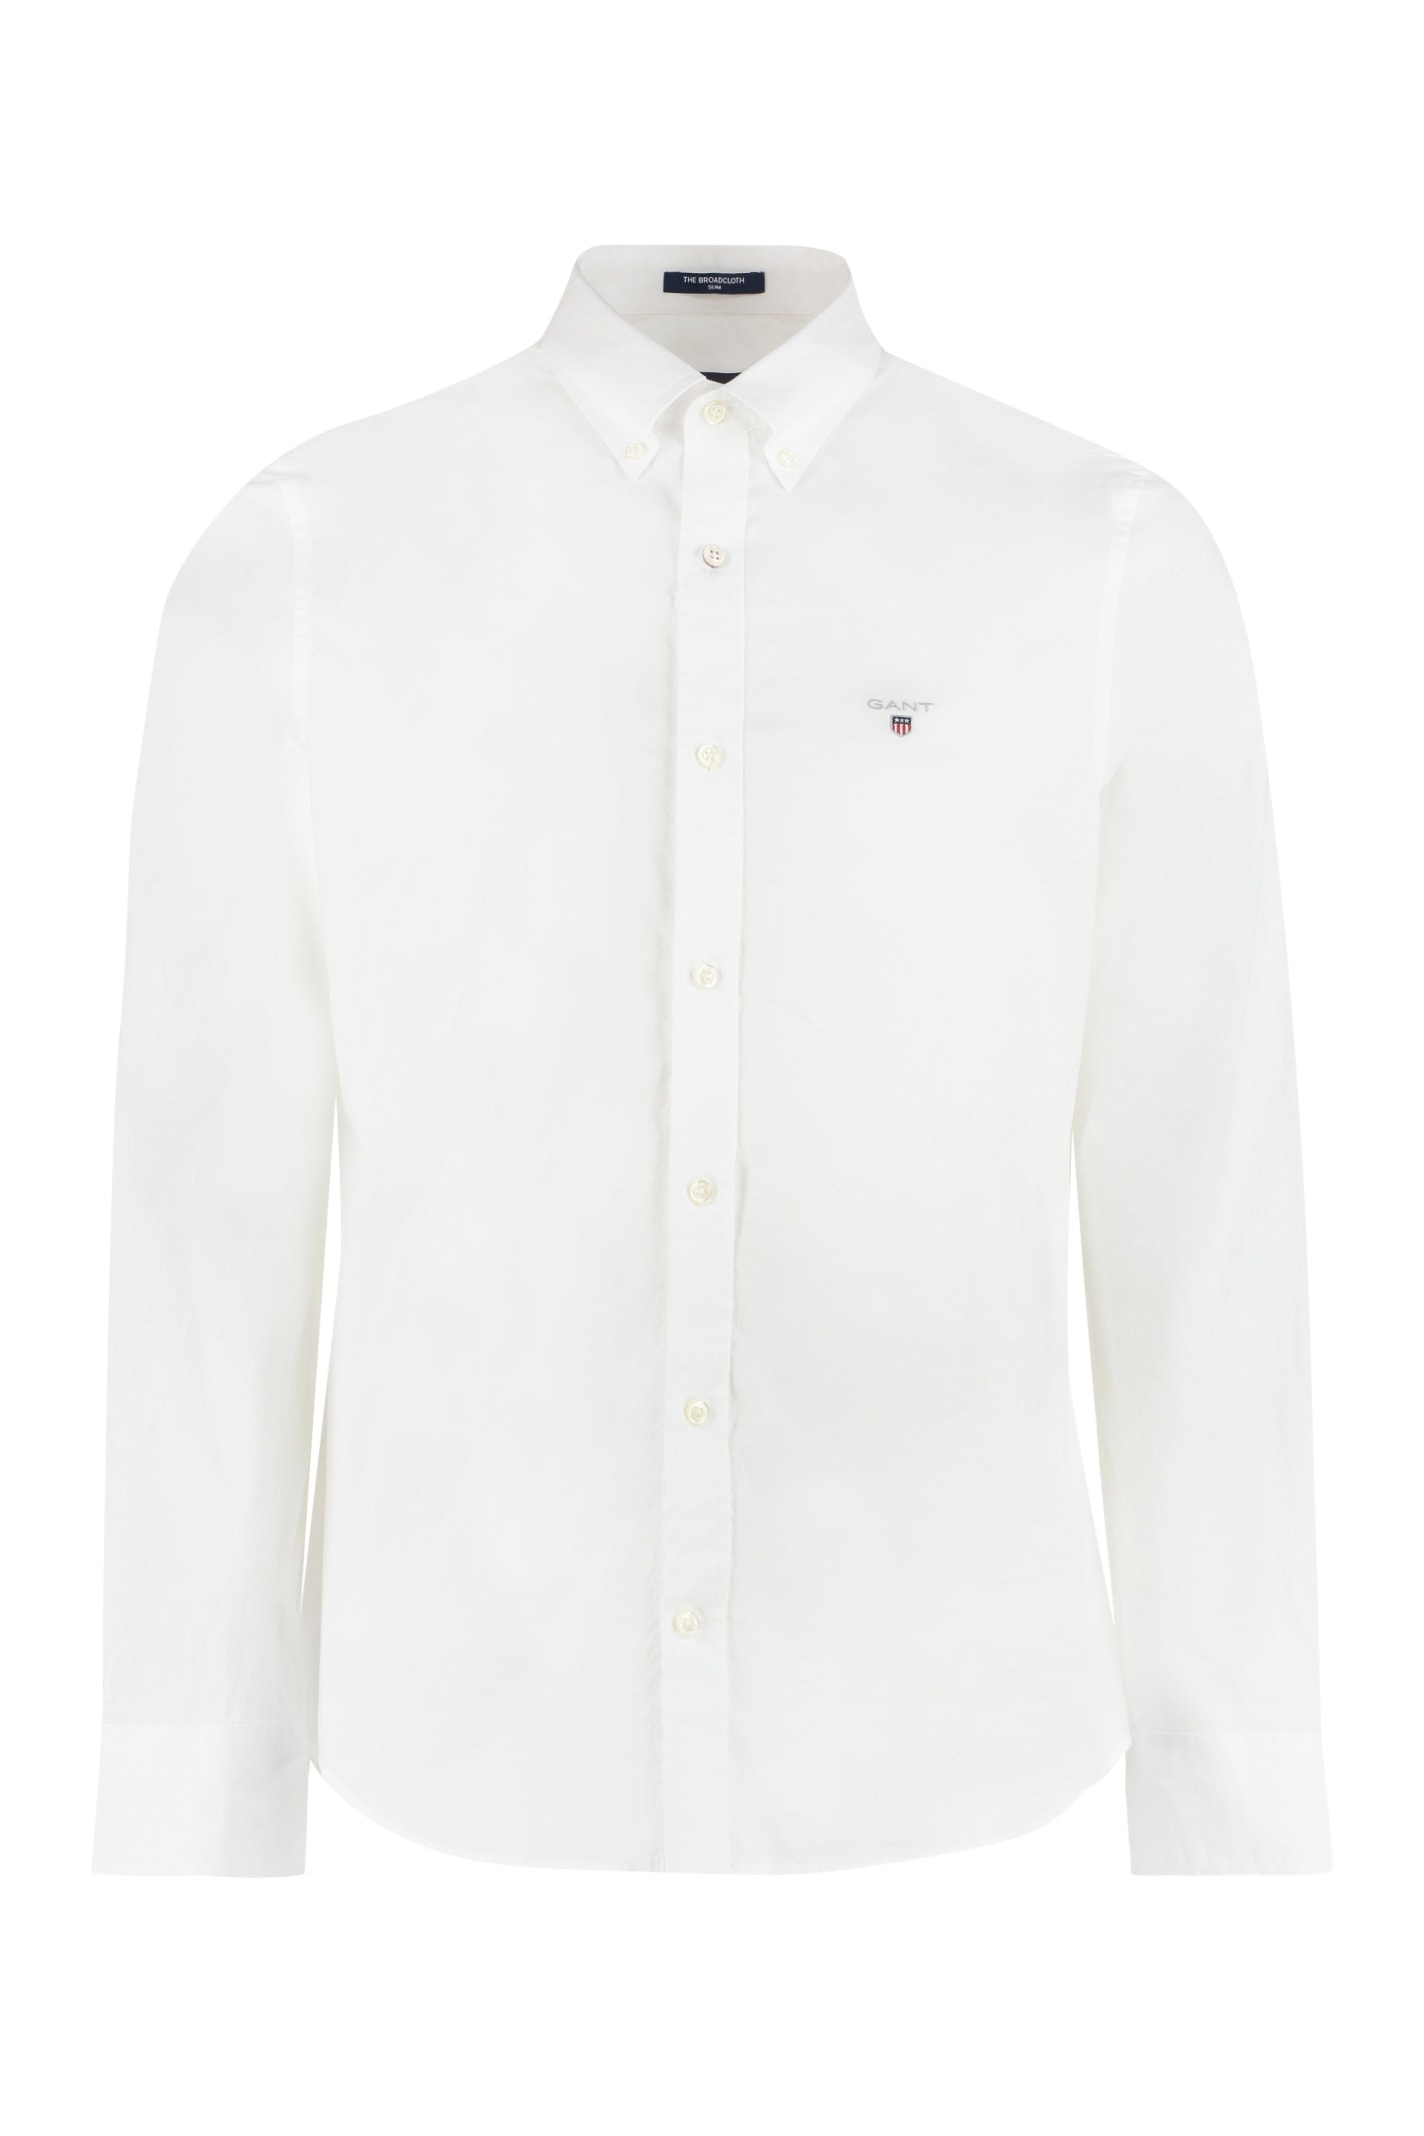 Gant Button-down Collar Cotton Shirt